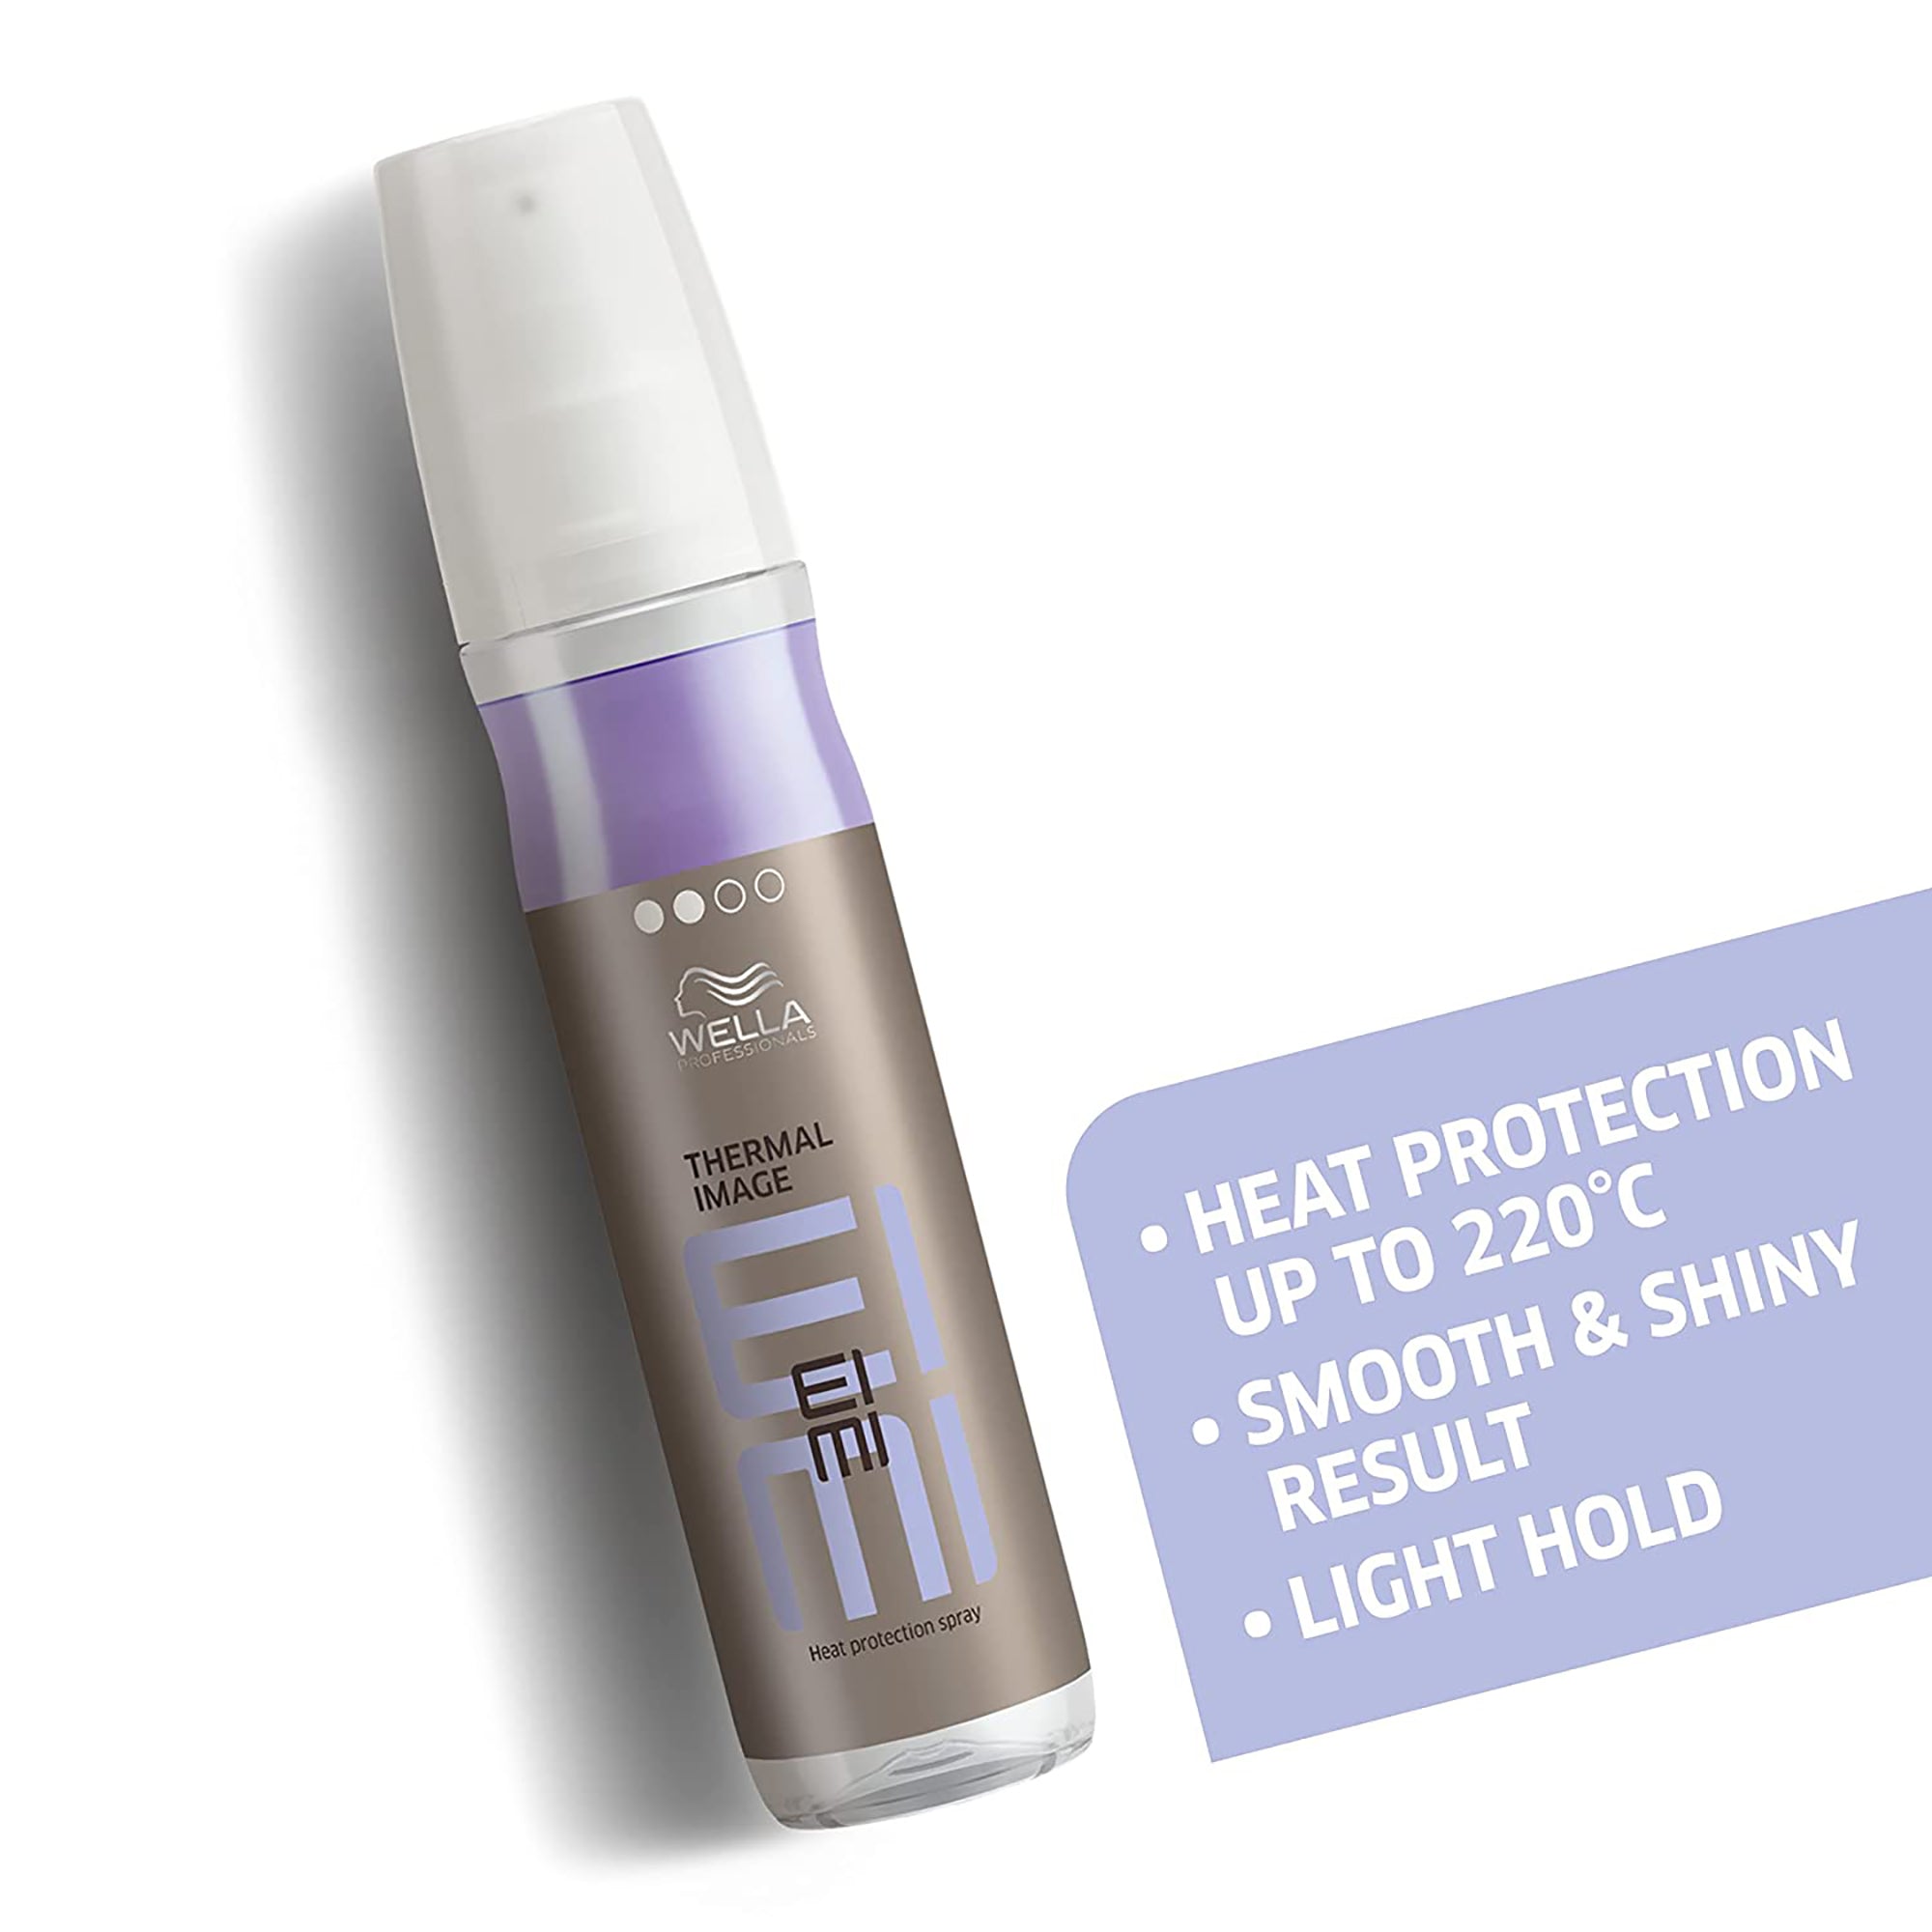 Wella EIMI Thermal Image Heat Protection Spray - 5oz / 5.07